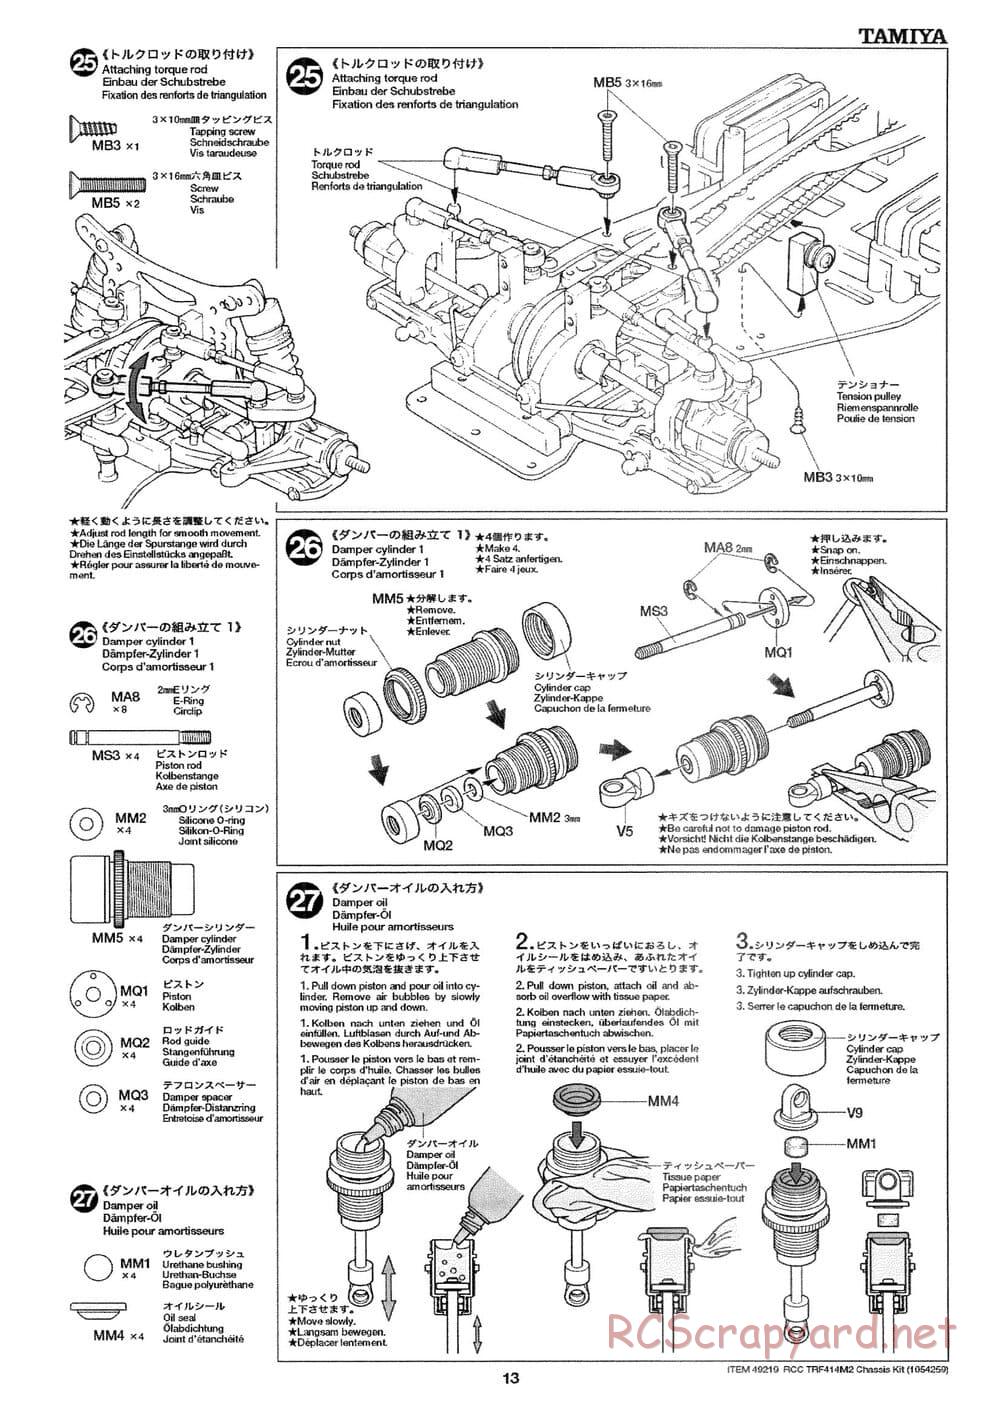 Tamiya - TRF414M II Chassis - Manual - Page 13